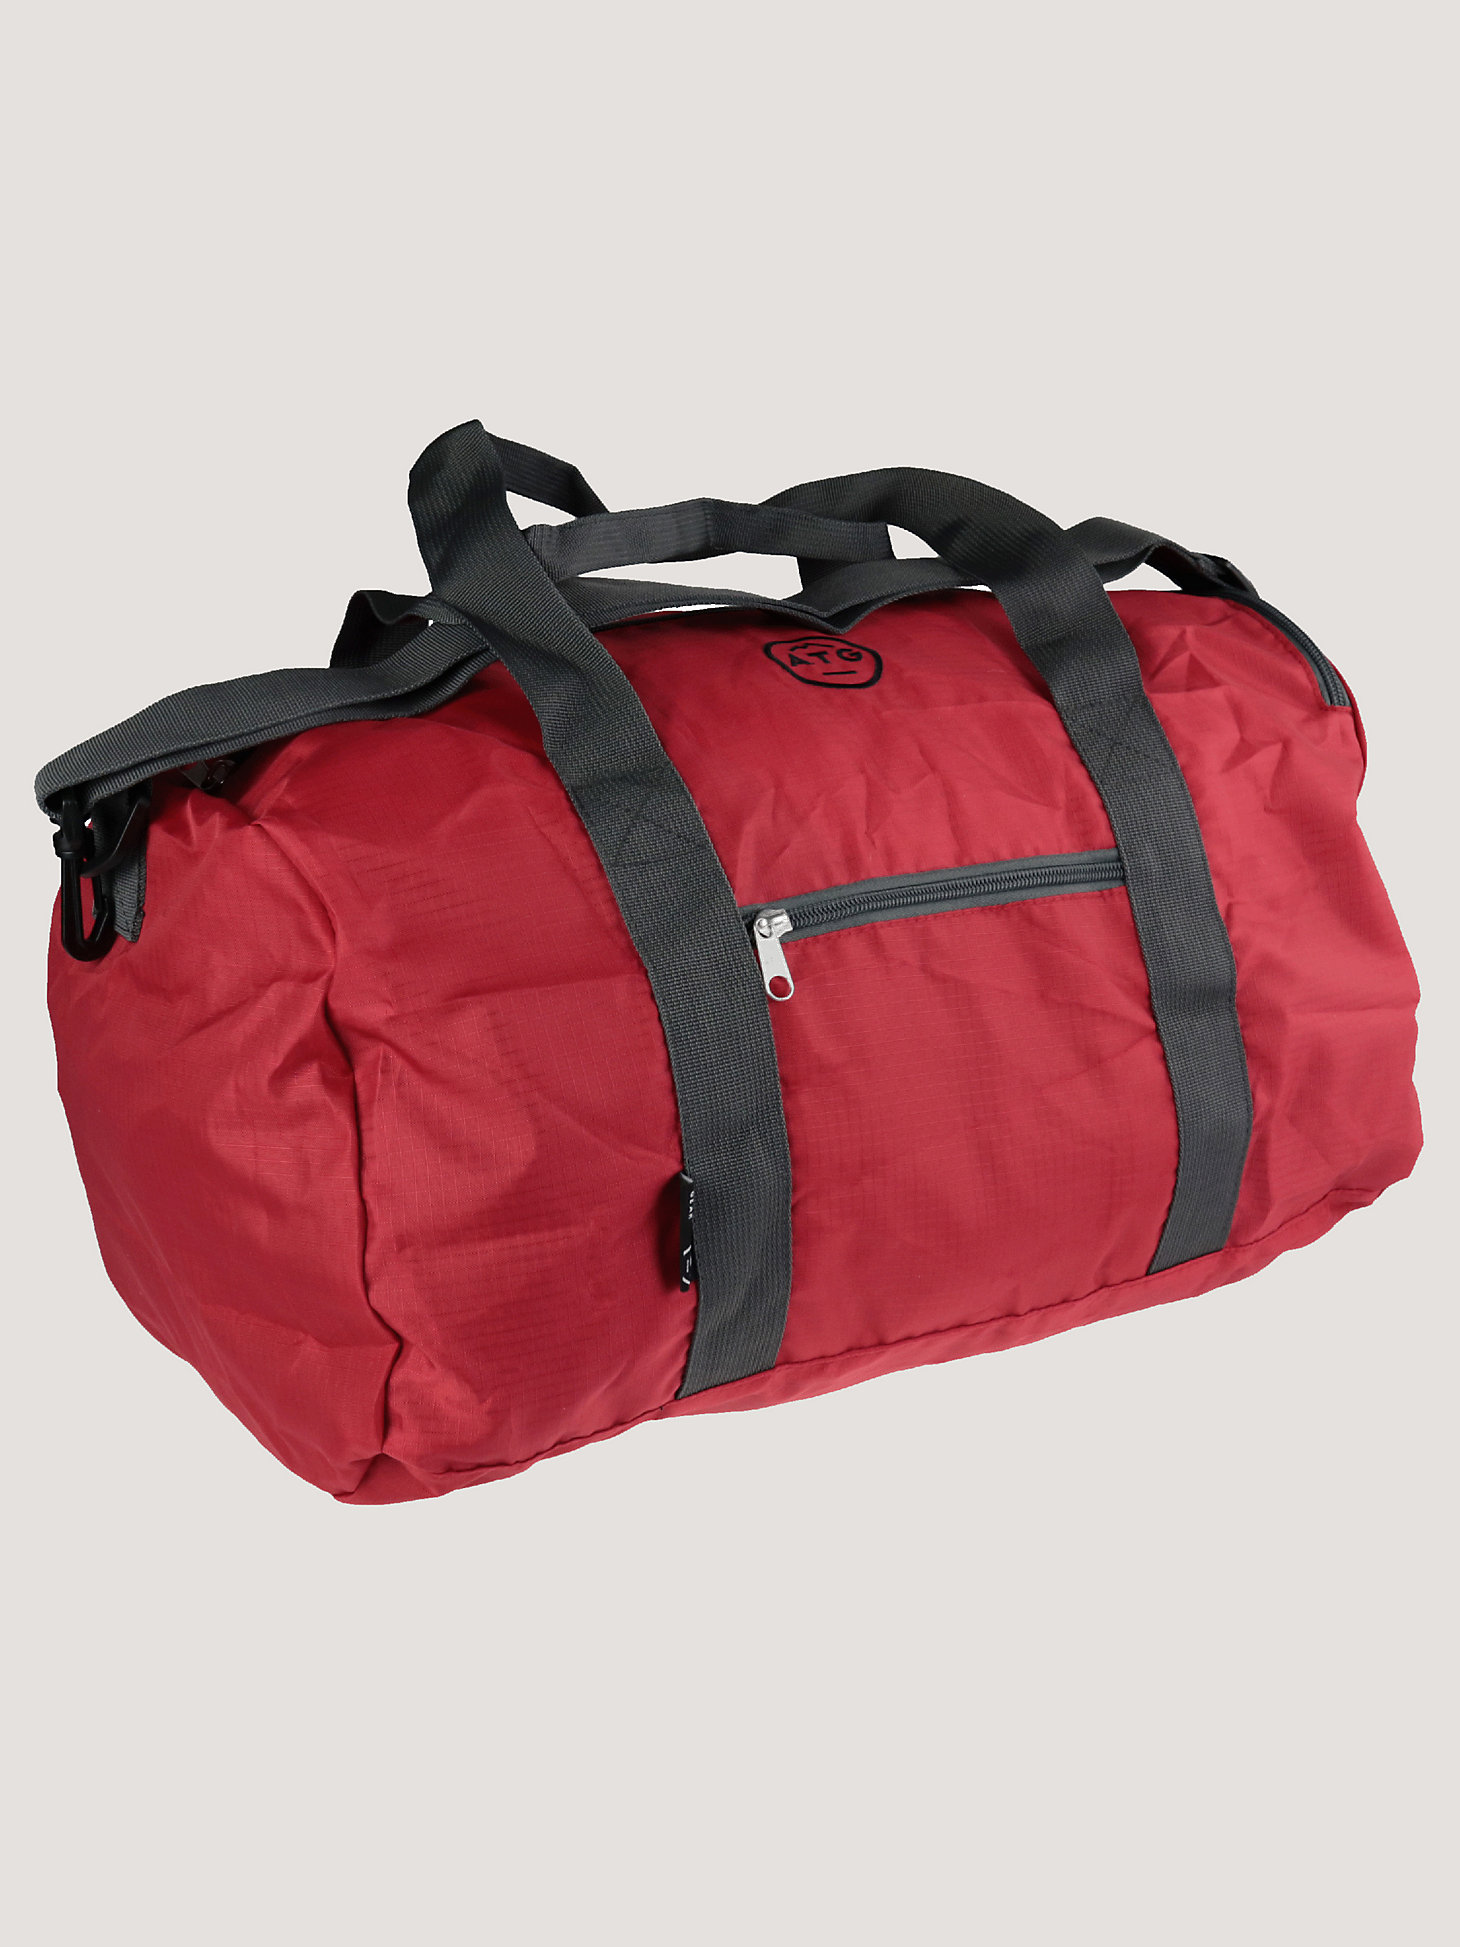 ATG By Wrangler™ Foldable Duffle Bag | Men's ACCESSORIES | Wrangler®